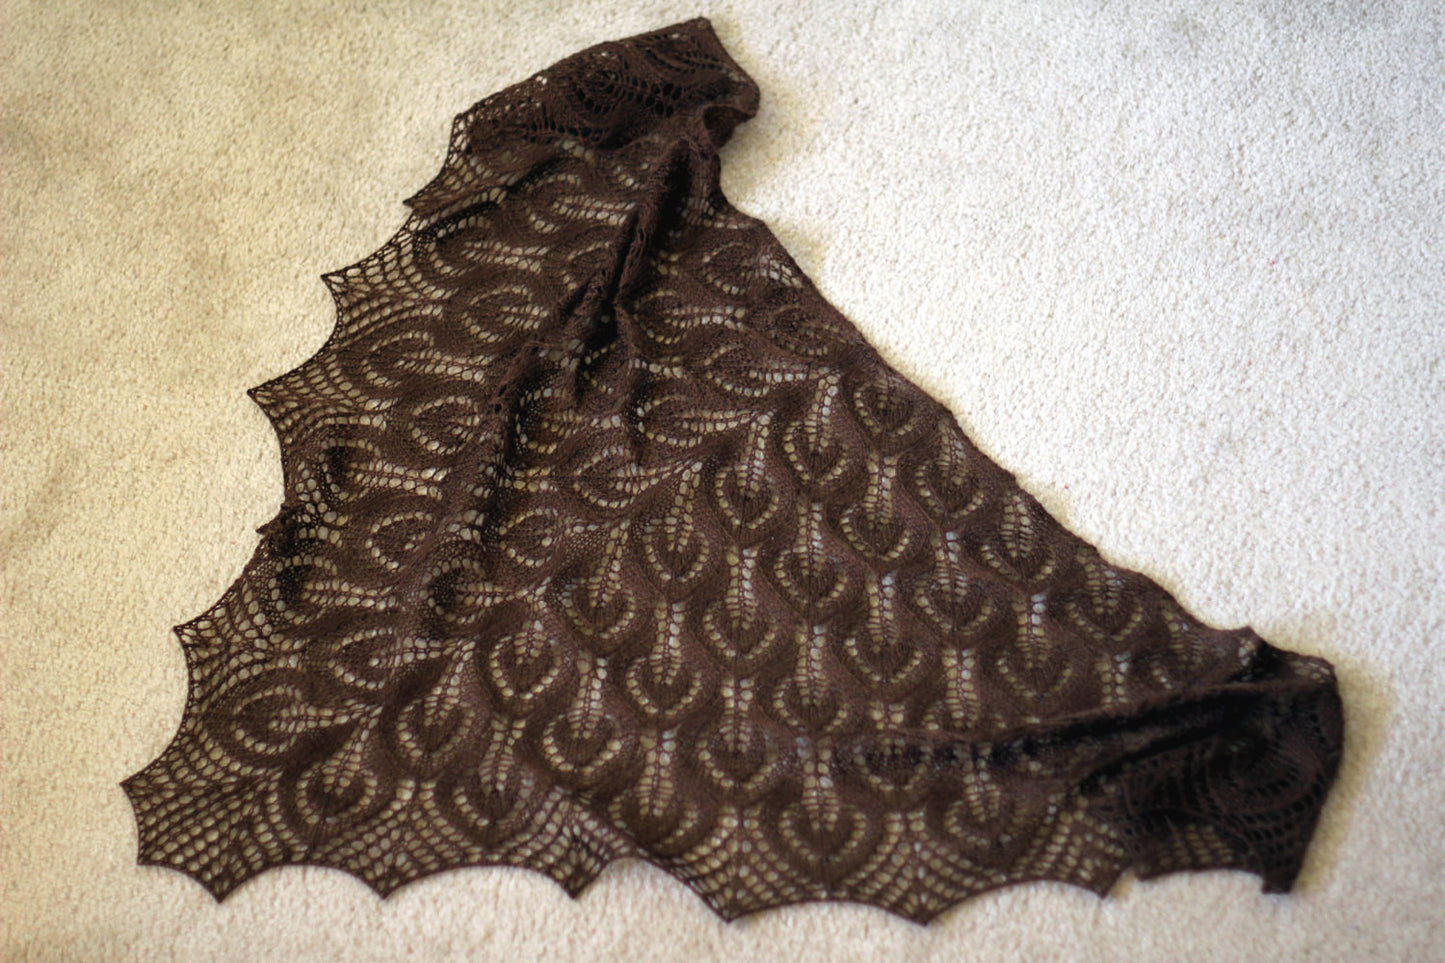 Brown lace shawl